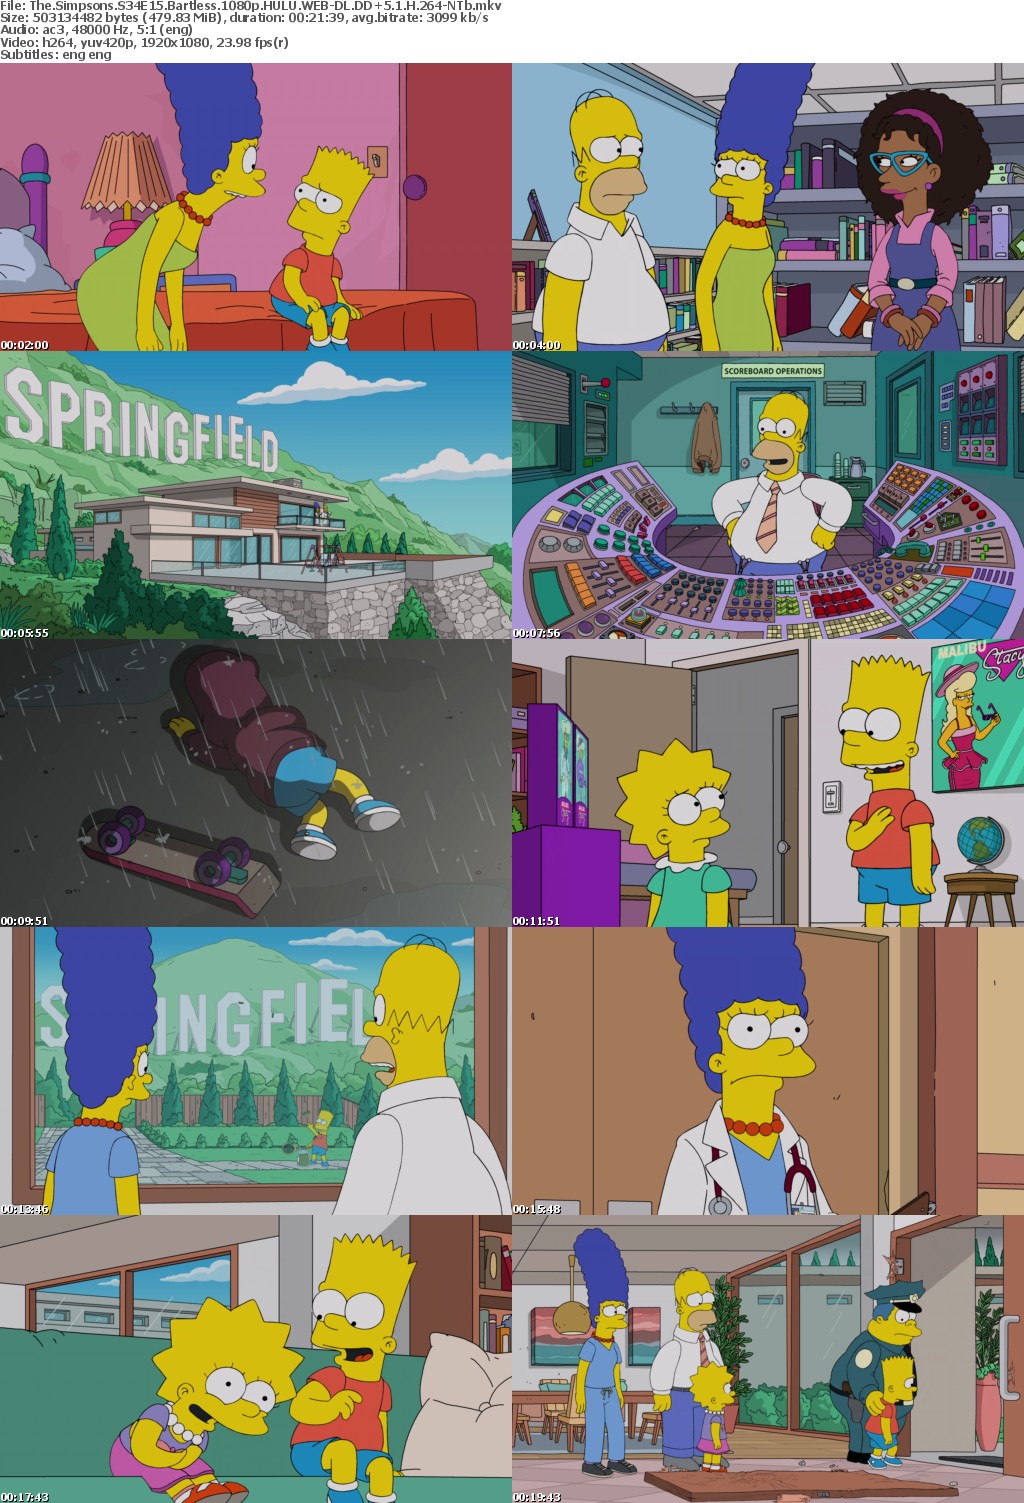 The Simpsons S34E15 Bartless 1080p HULU WEBRip DDP5 1 x264-NTb